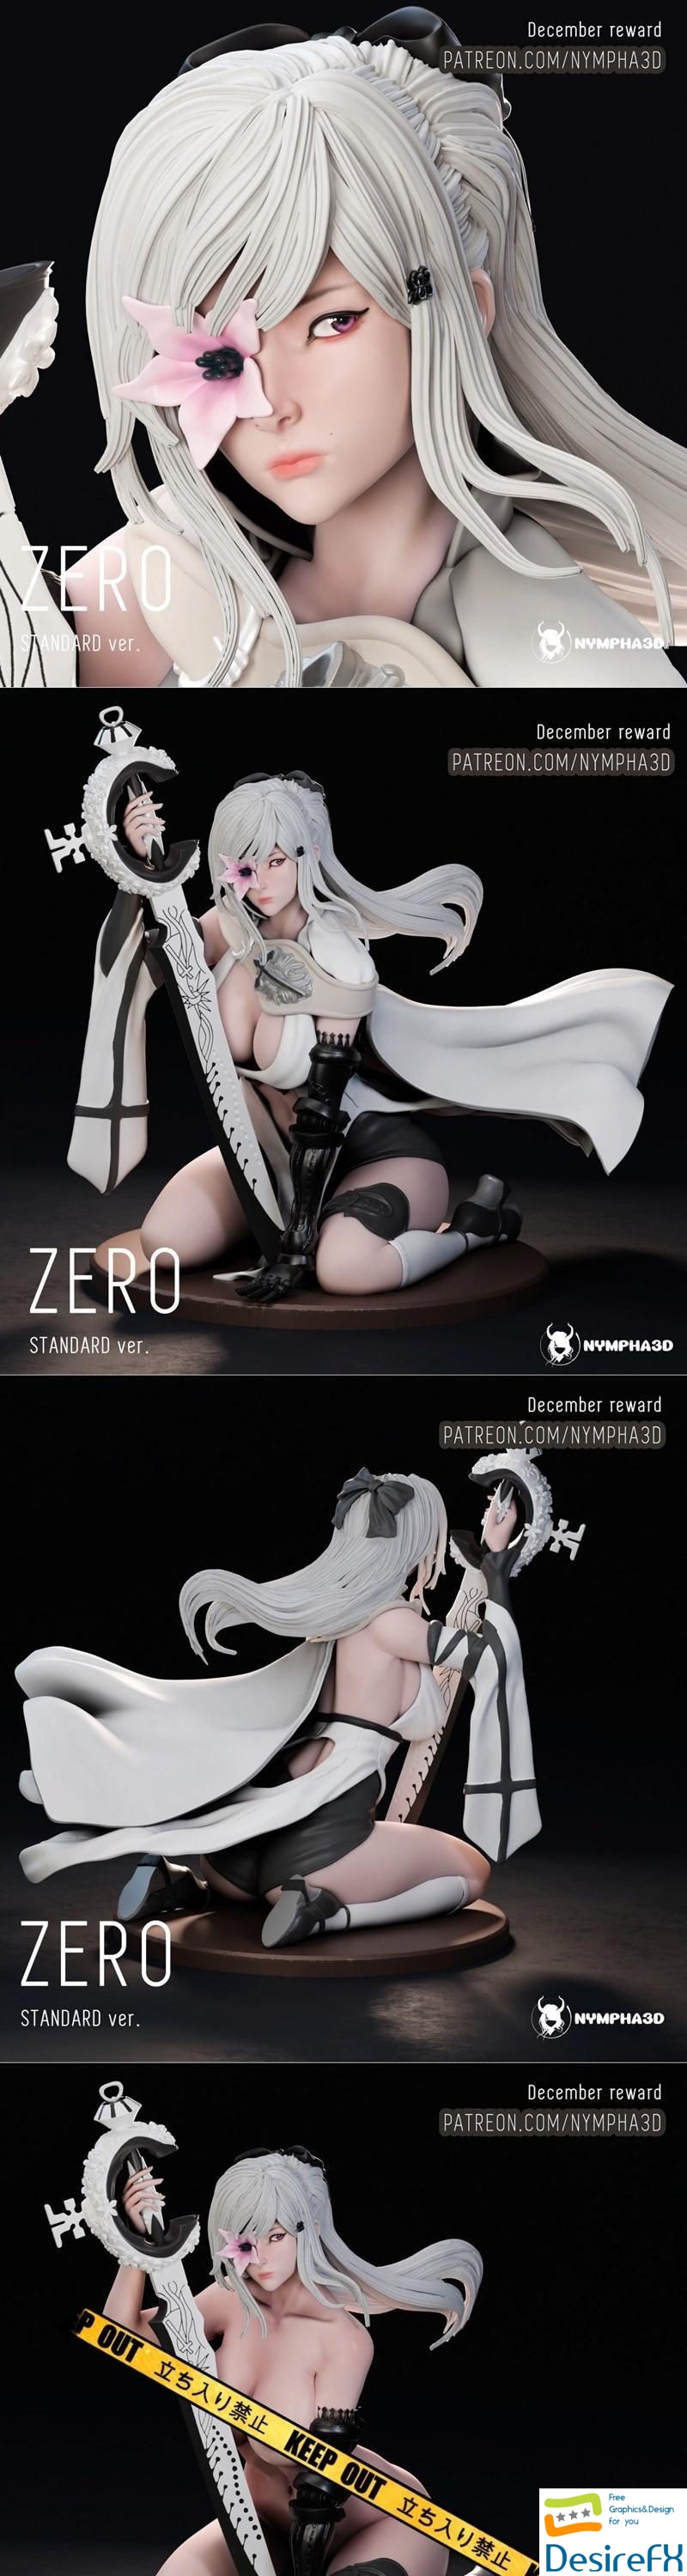 Zero - Drakengard 3 3D Print